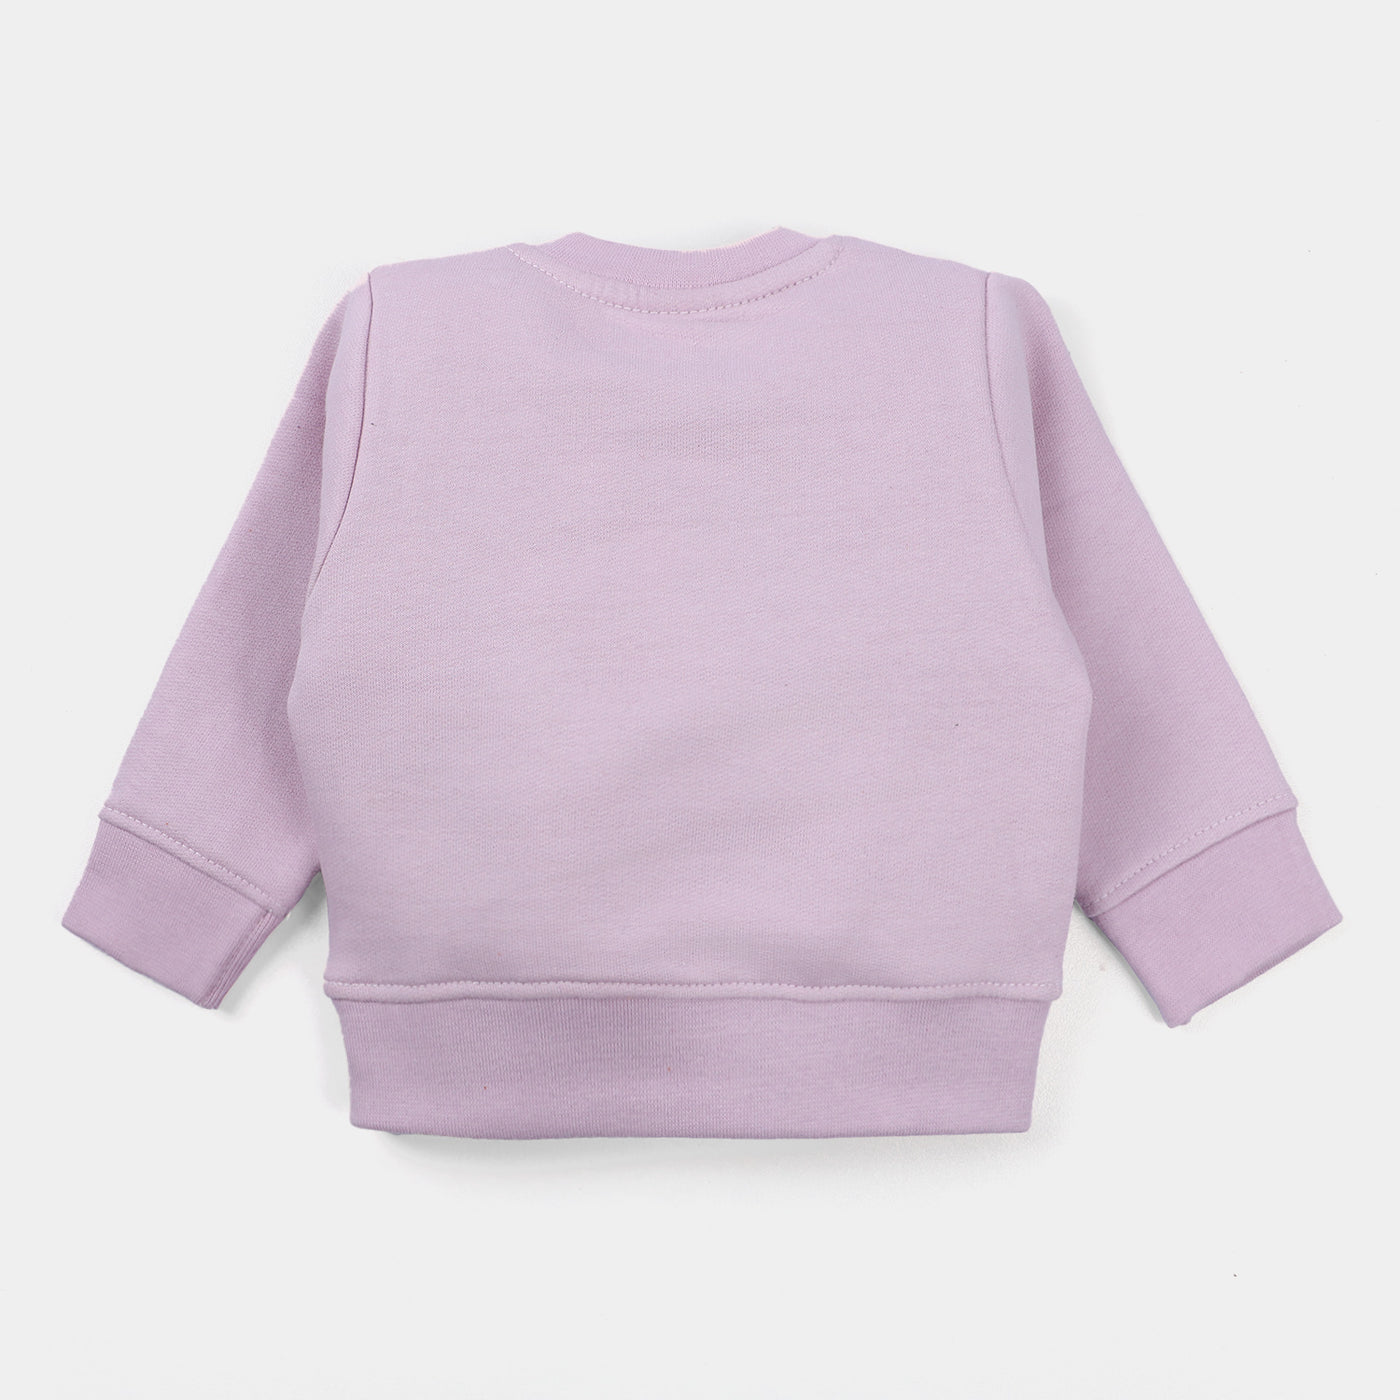 Infants Girls Fleece Sweatshirt Winter-D.Lavender